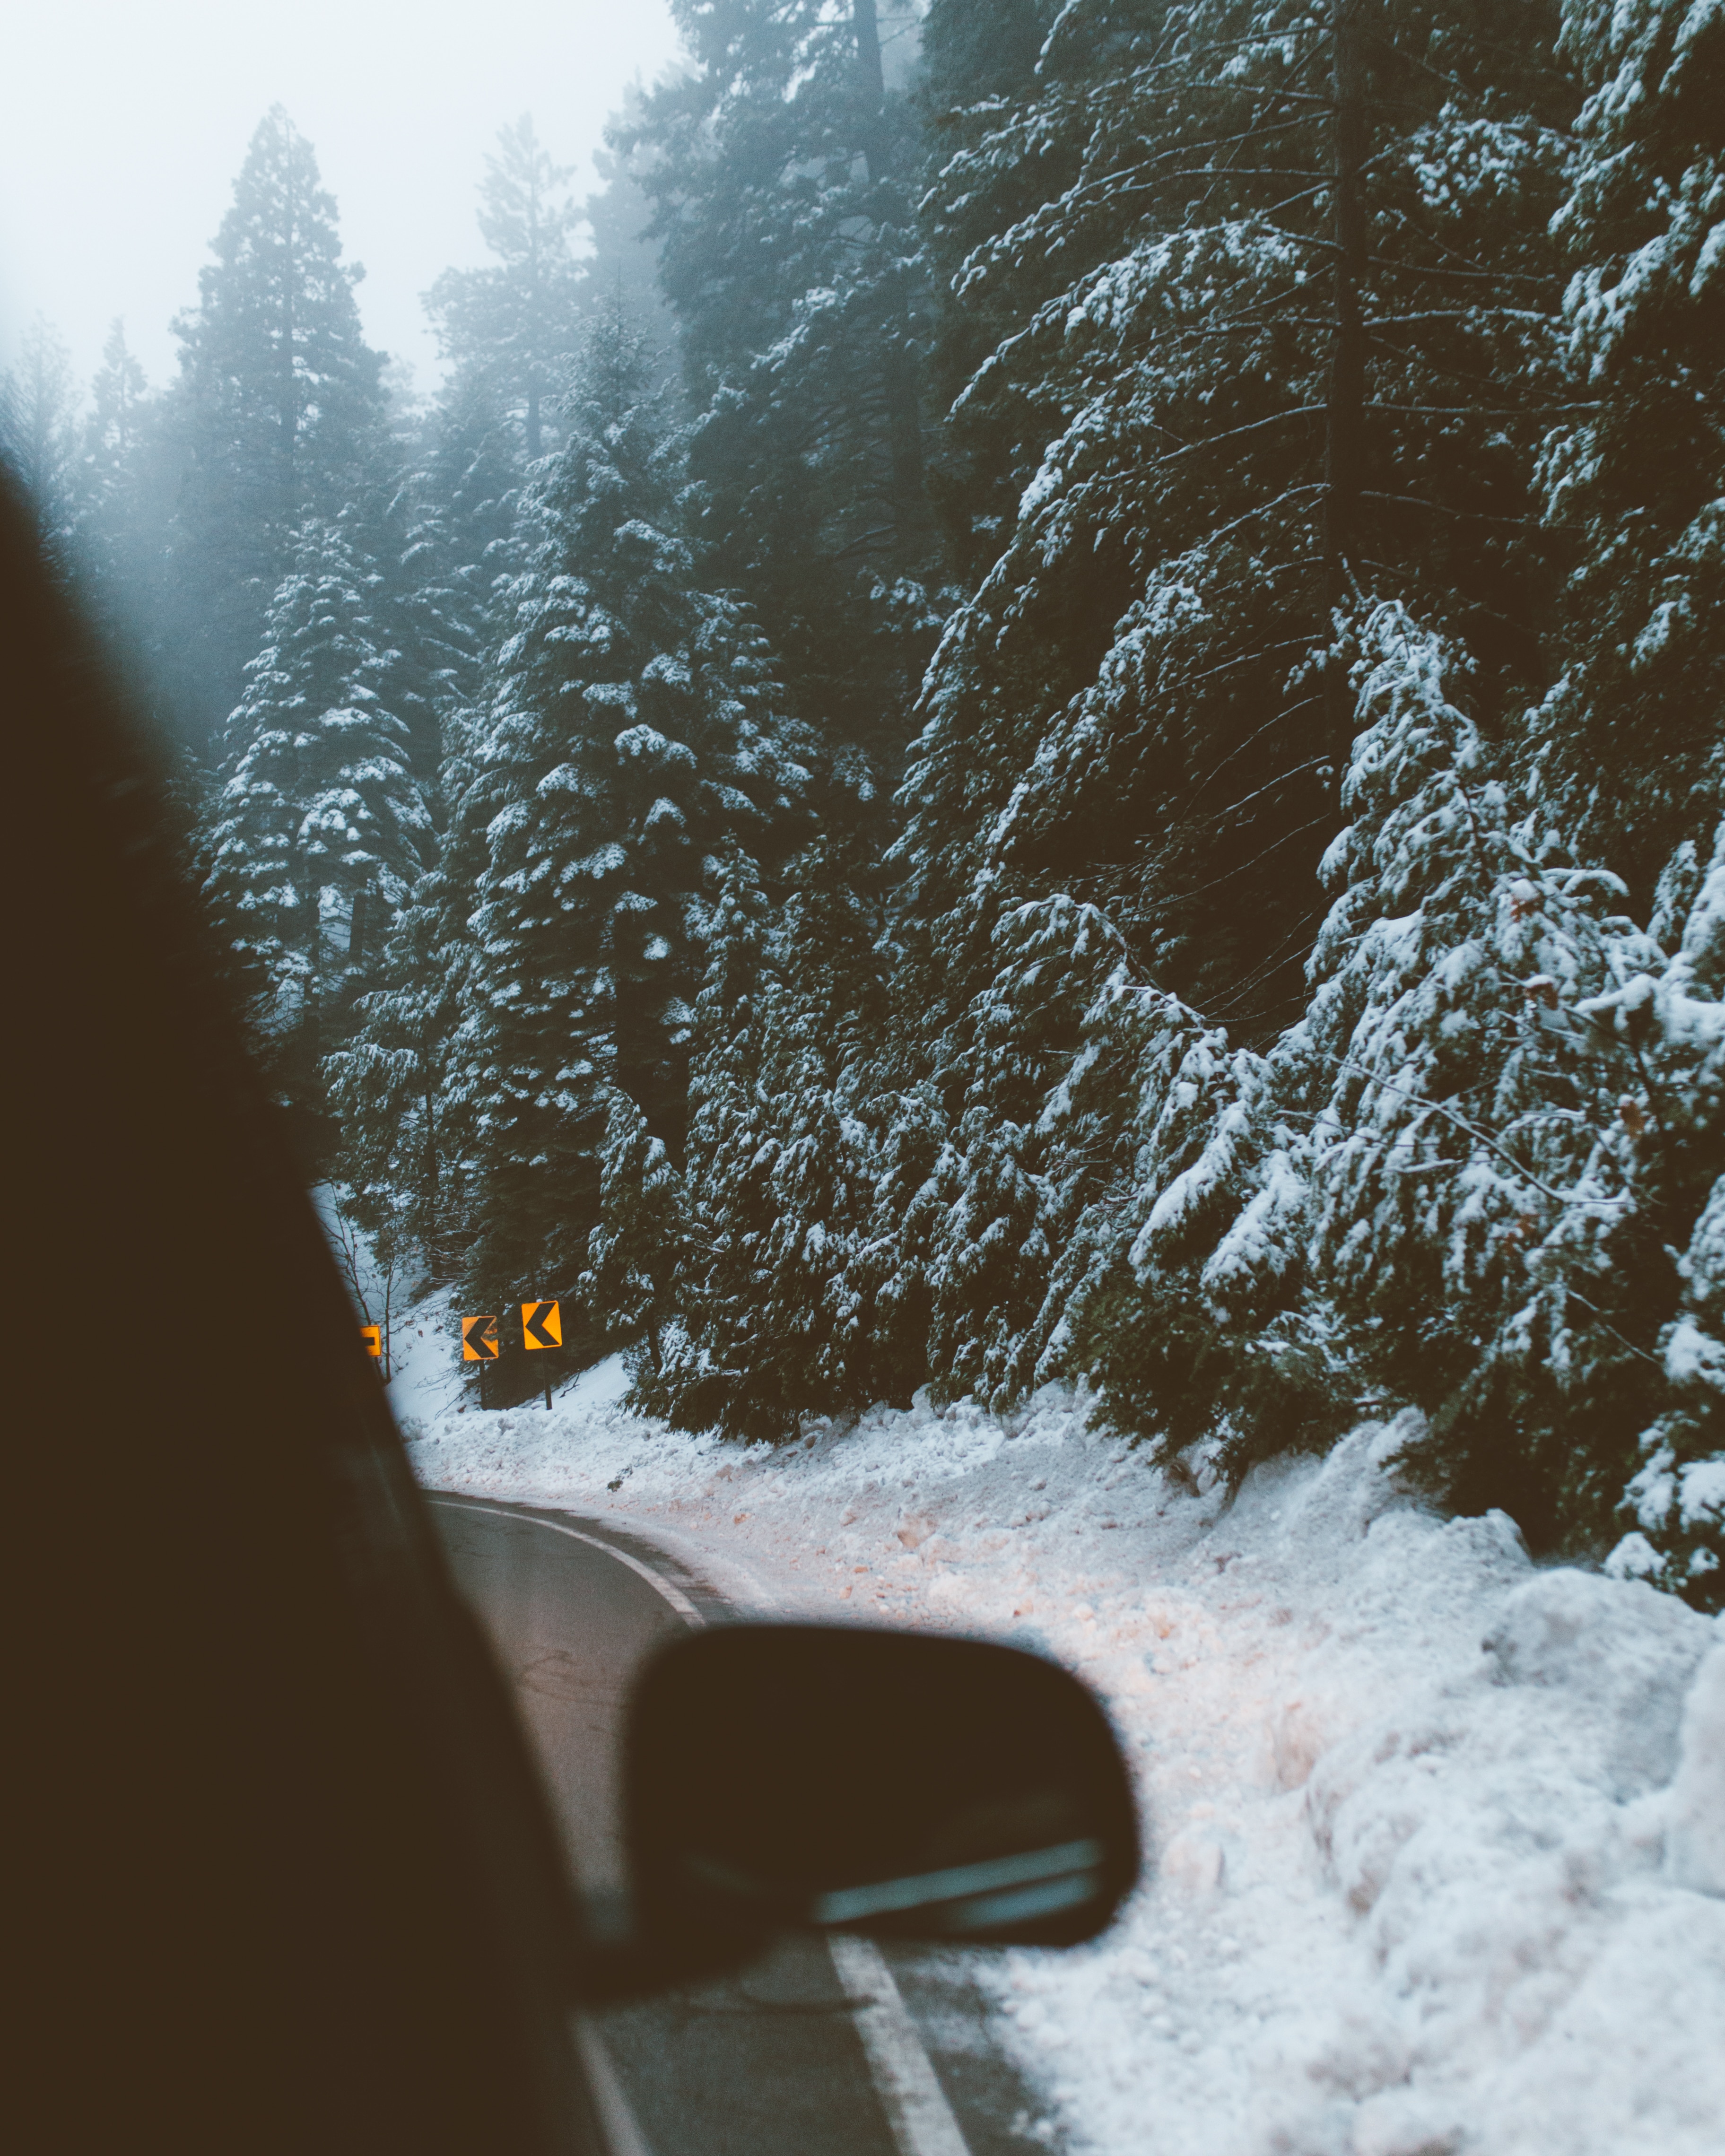 snowed pine tree near on road during daytime